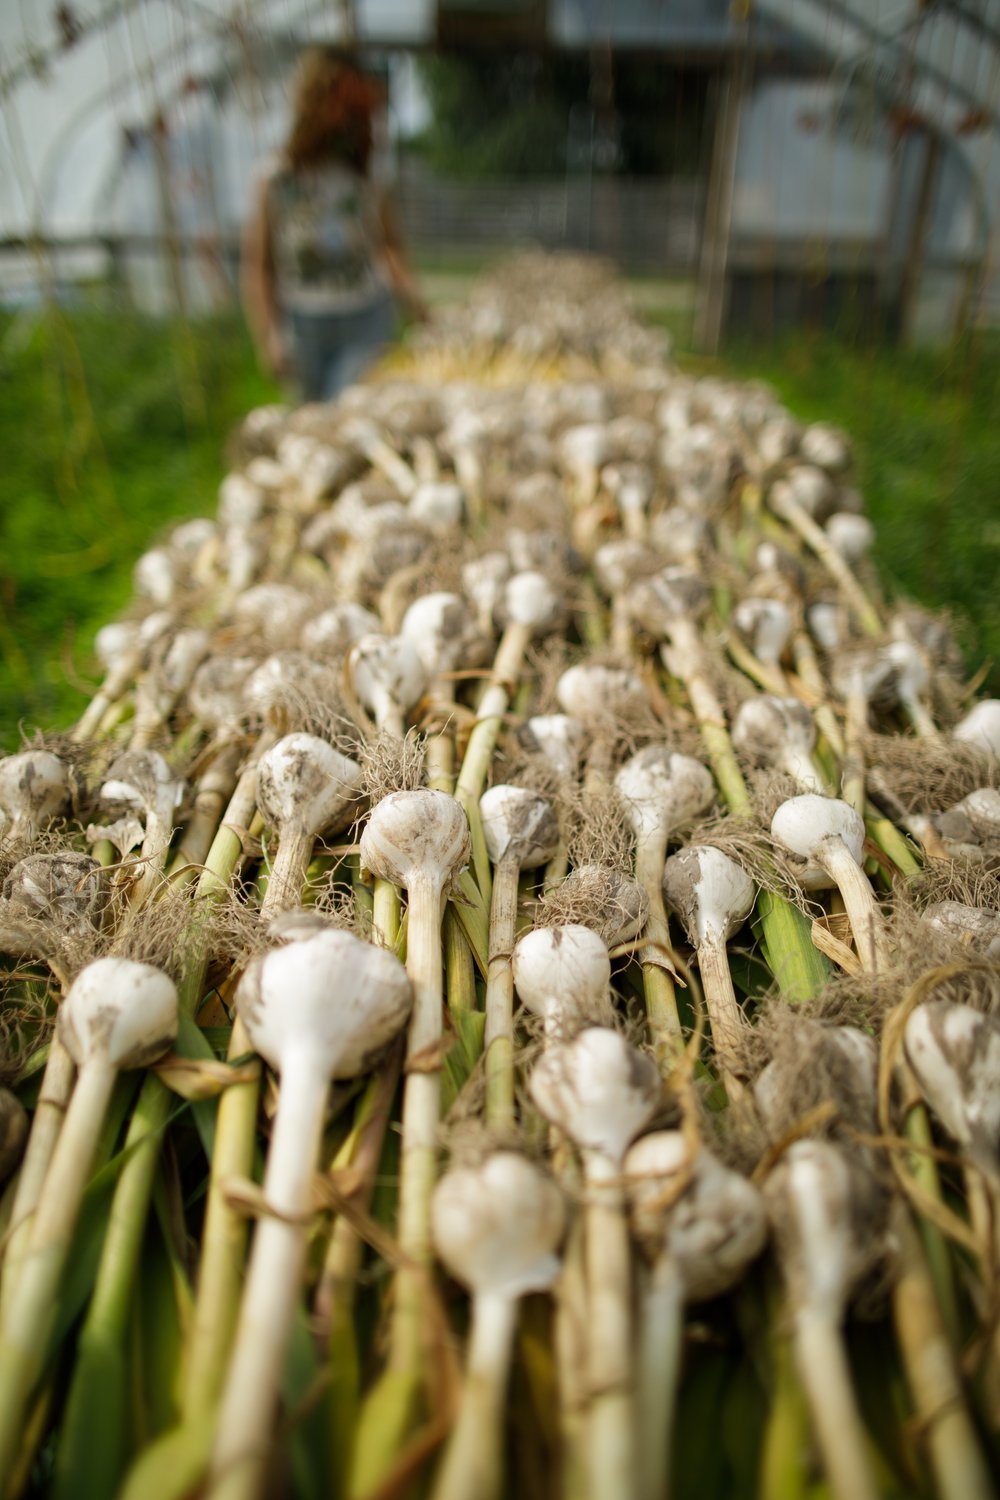 OG-p-athena-photography-s-lots-of-garlic-2020.jpg